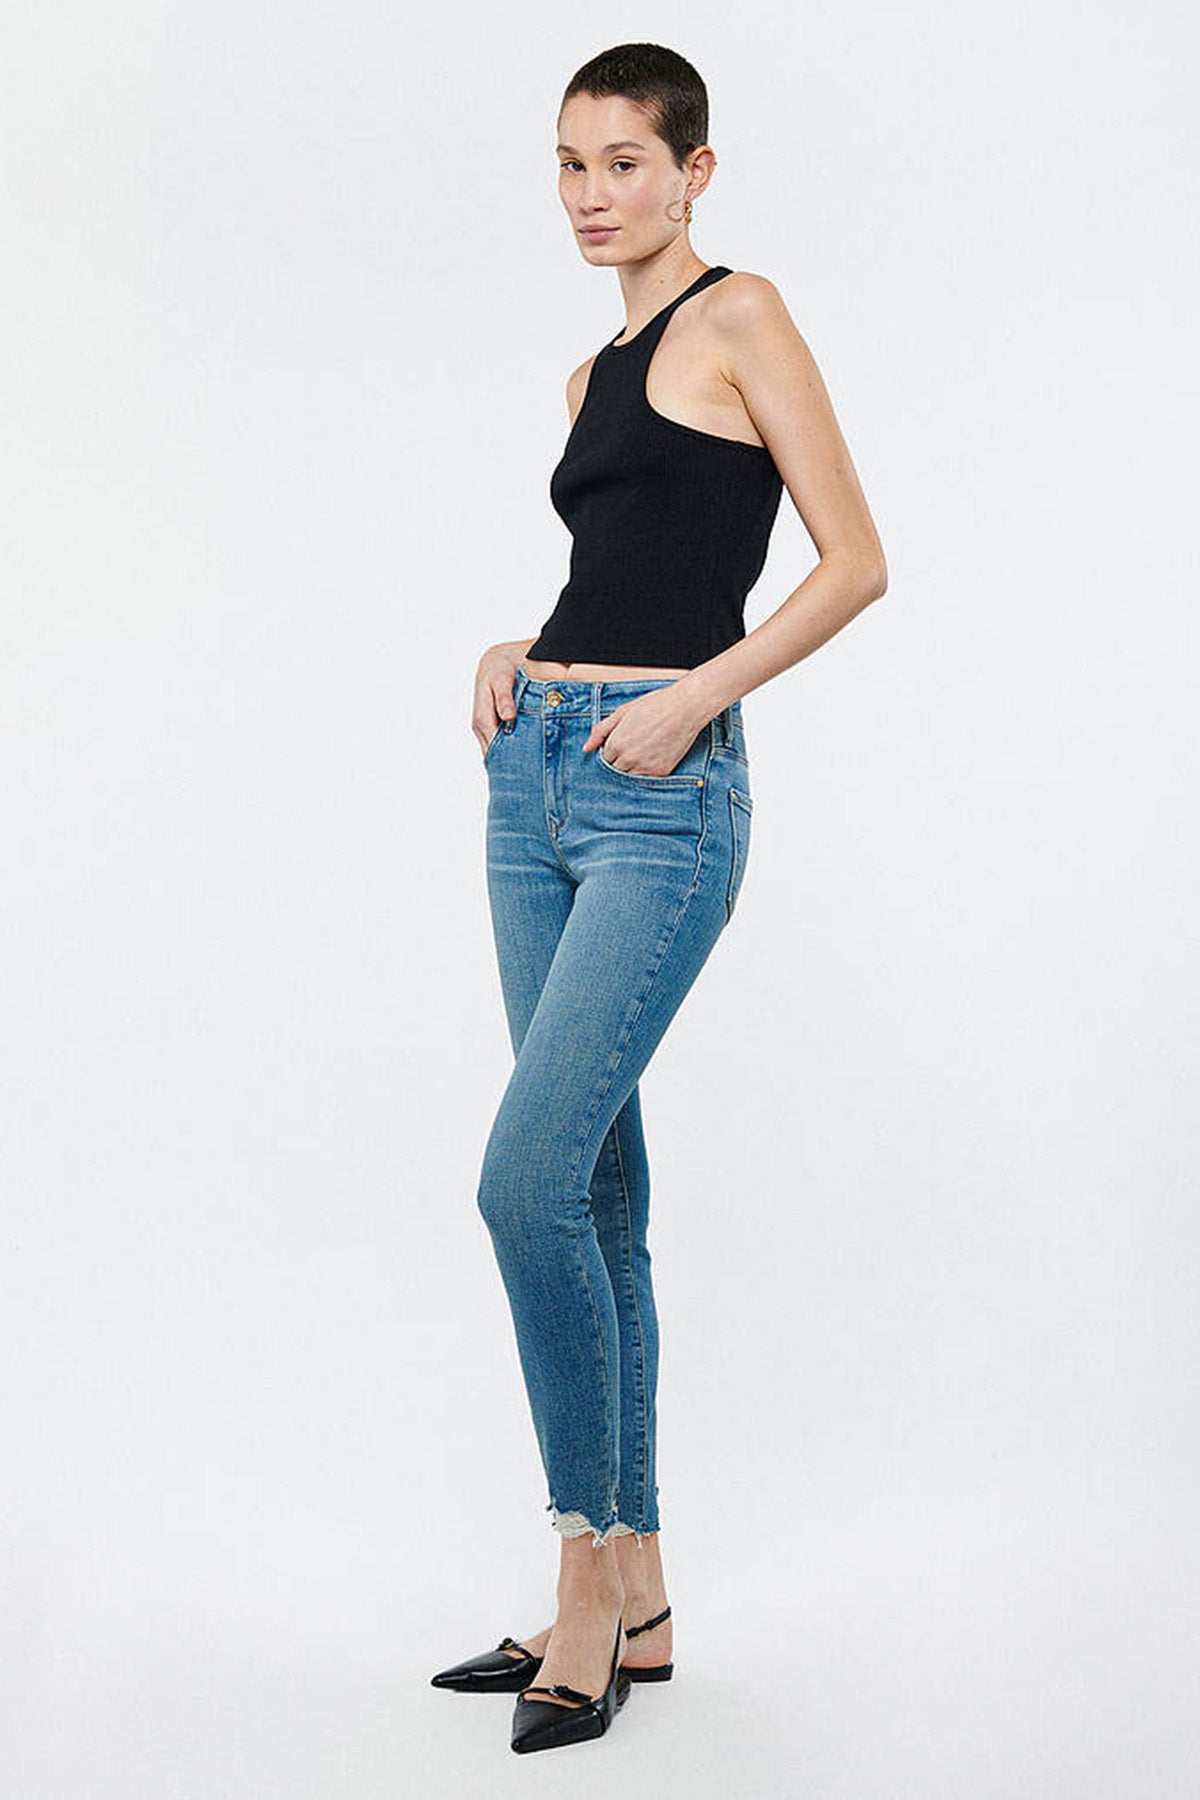 Mavi Tess Yüksek Bel Skinny Fit Dar Paça Jeans Bayan Kot Pantolon 100328-84205 MAVİ